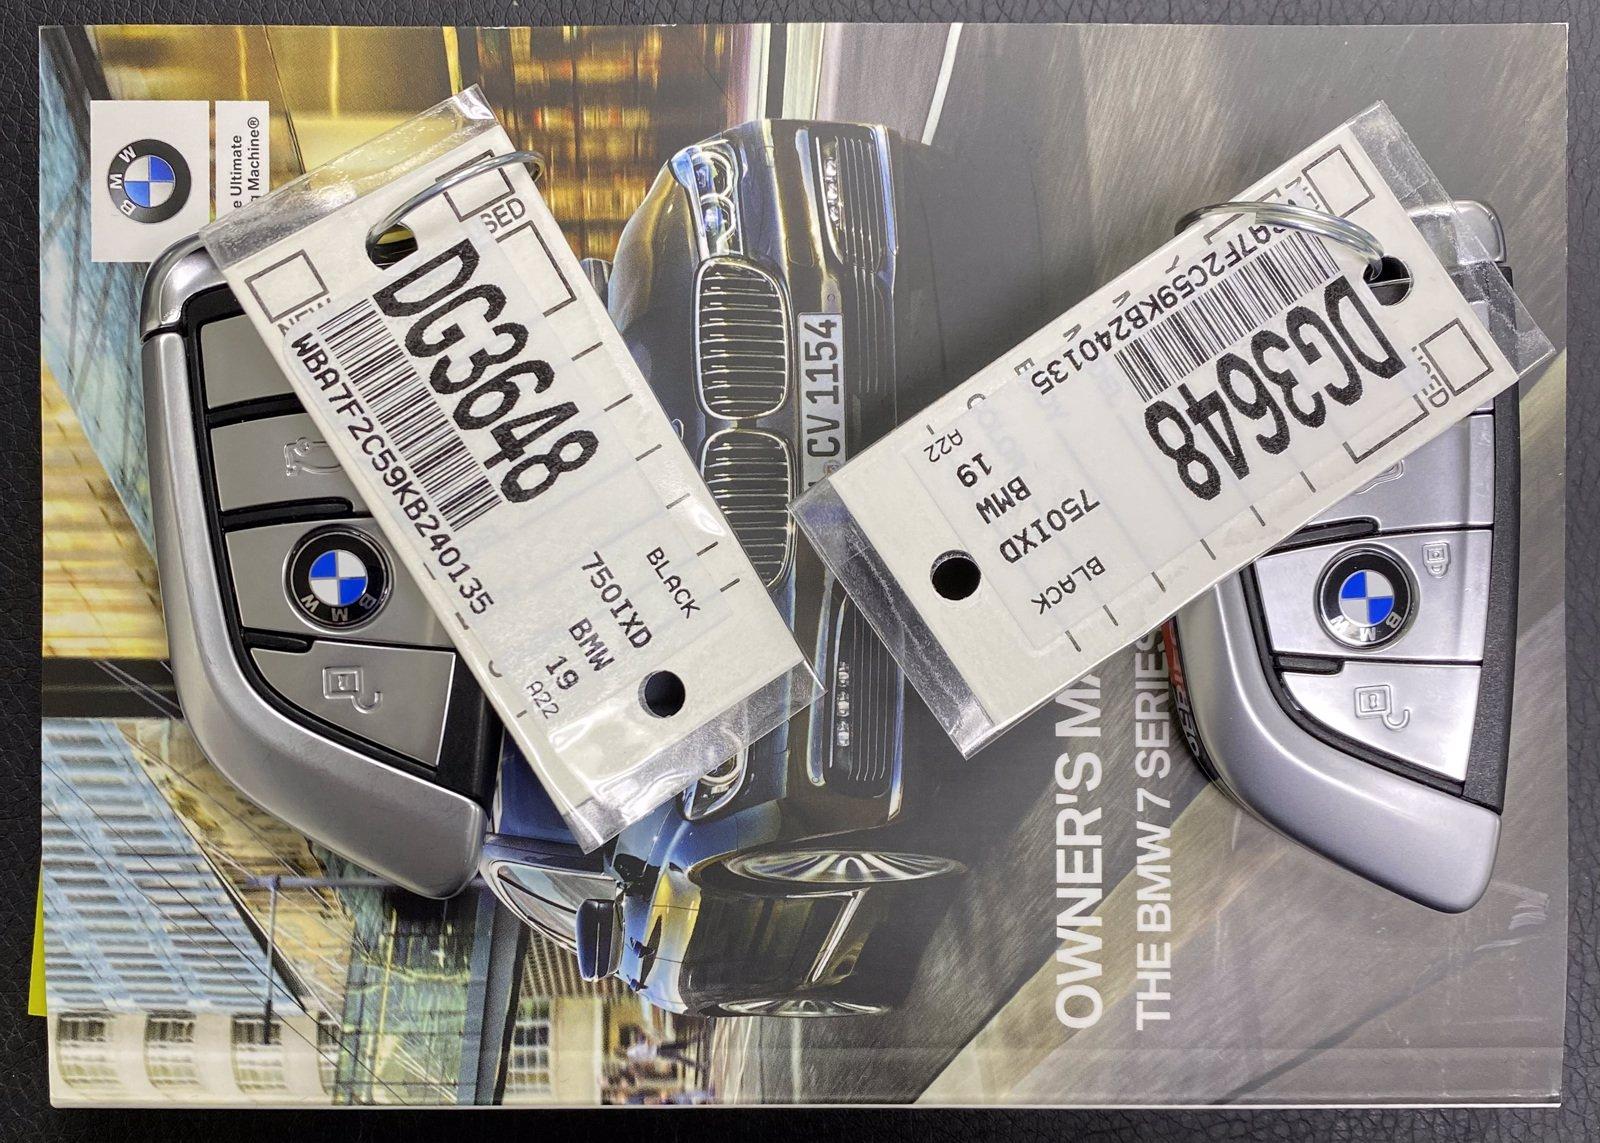 Used 2019 BMW 7 Series 750i xDrive M-Sport | Downers Grove, IL